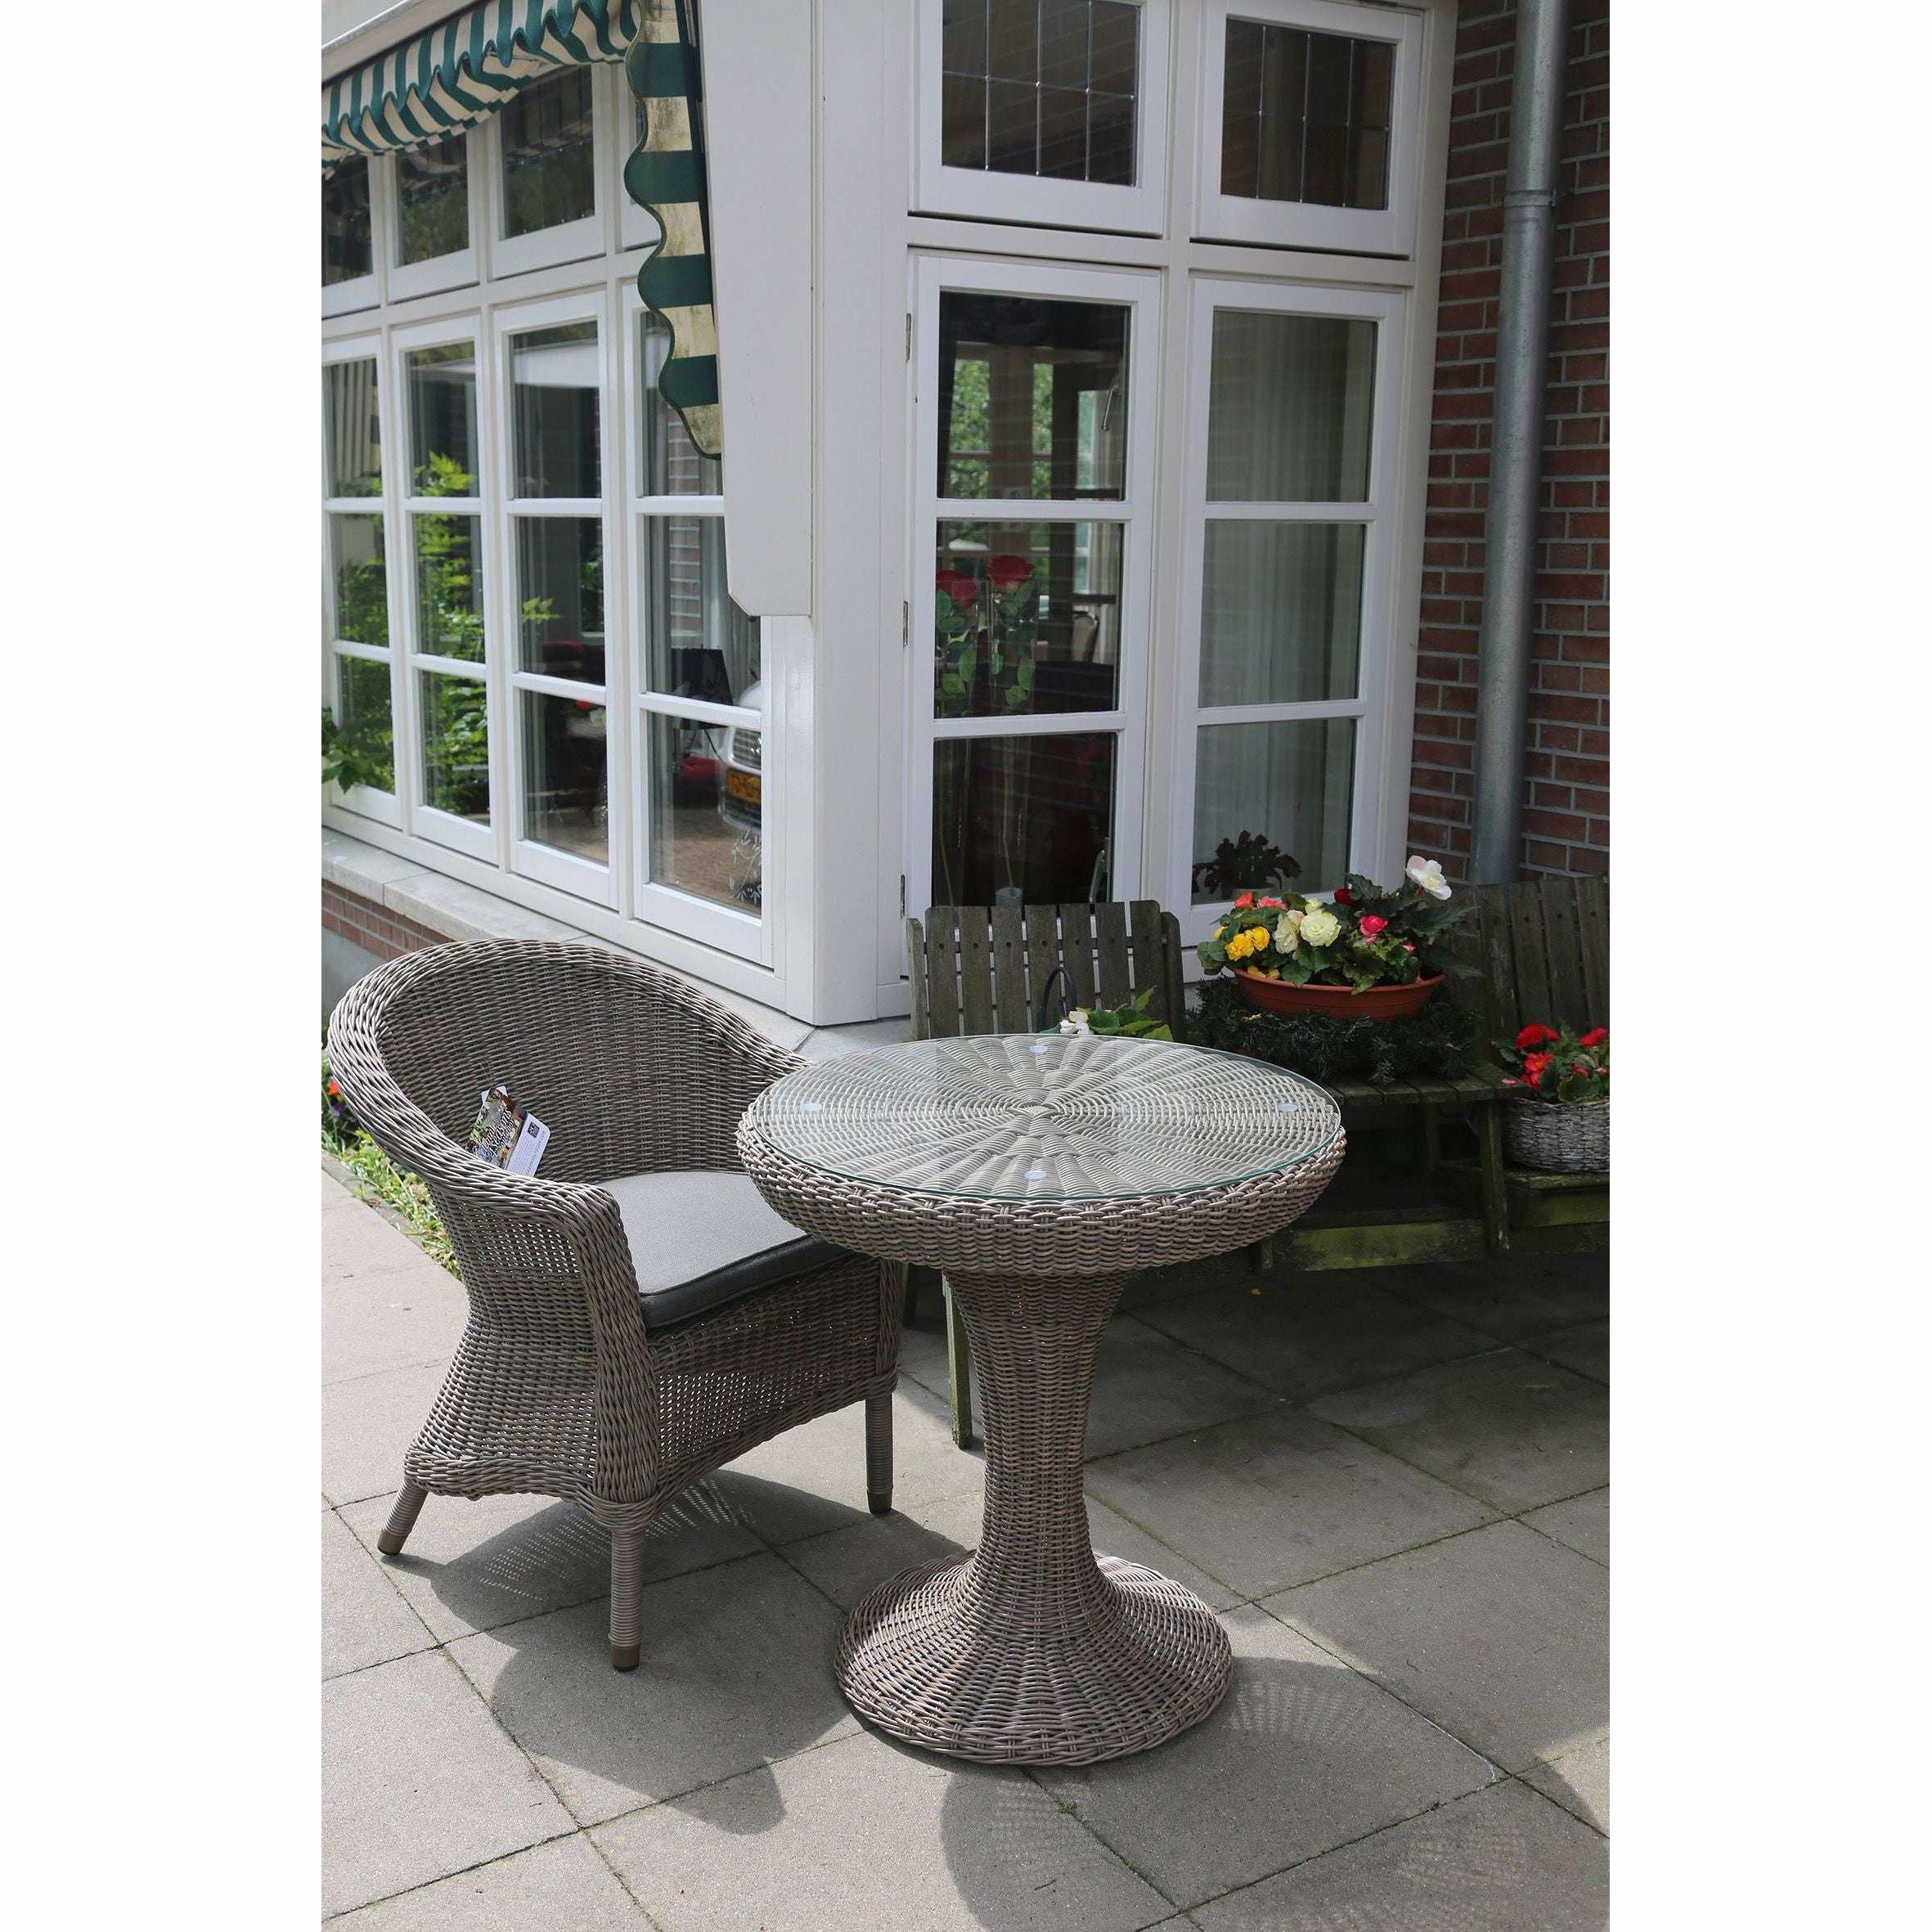 Exceptional Garden:4 Seasons Outdoor Chester Bistro set with Victoria Bistro Table